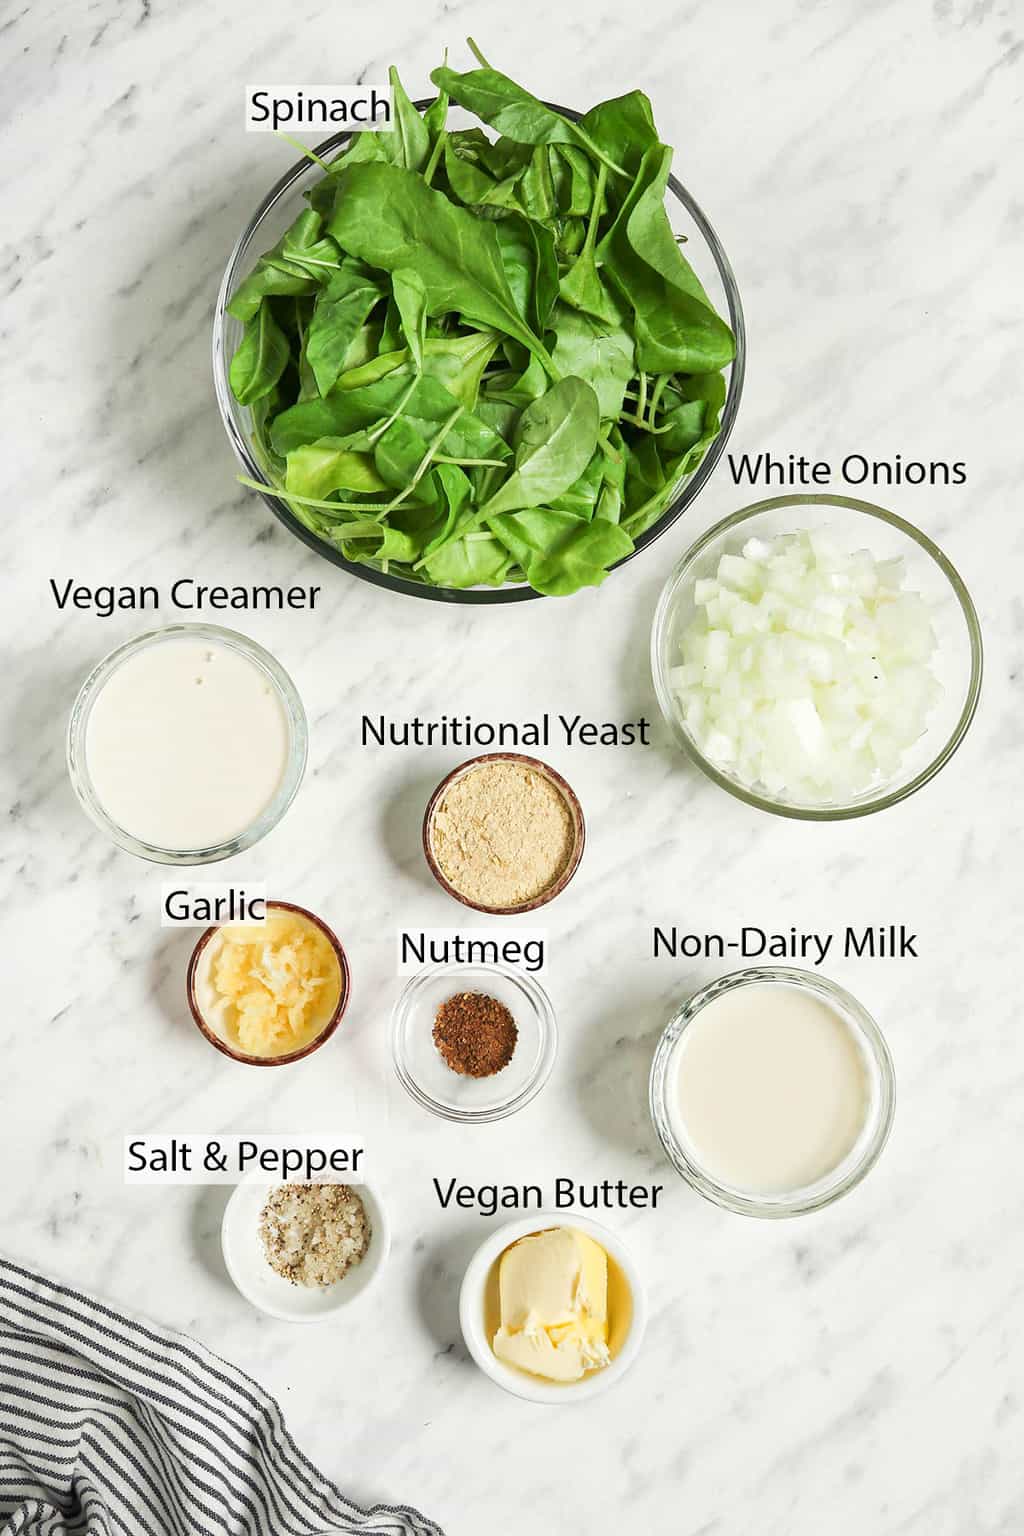 fresh spinach, onions, vegan creamer, nutritional yeast, garlic, nutmeg, non-dairy milk, vegan butter, salt, and pepper in bowls for creamed spinach recipe